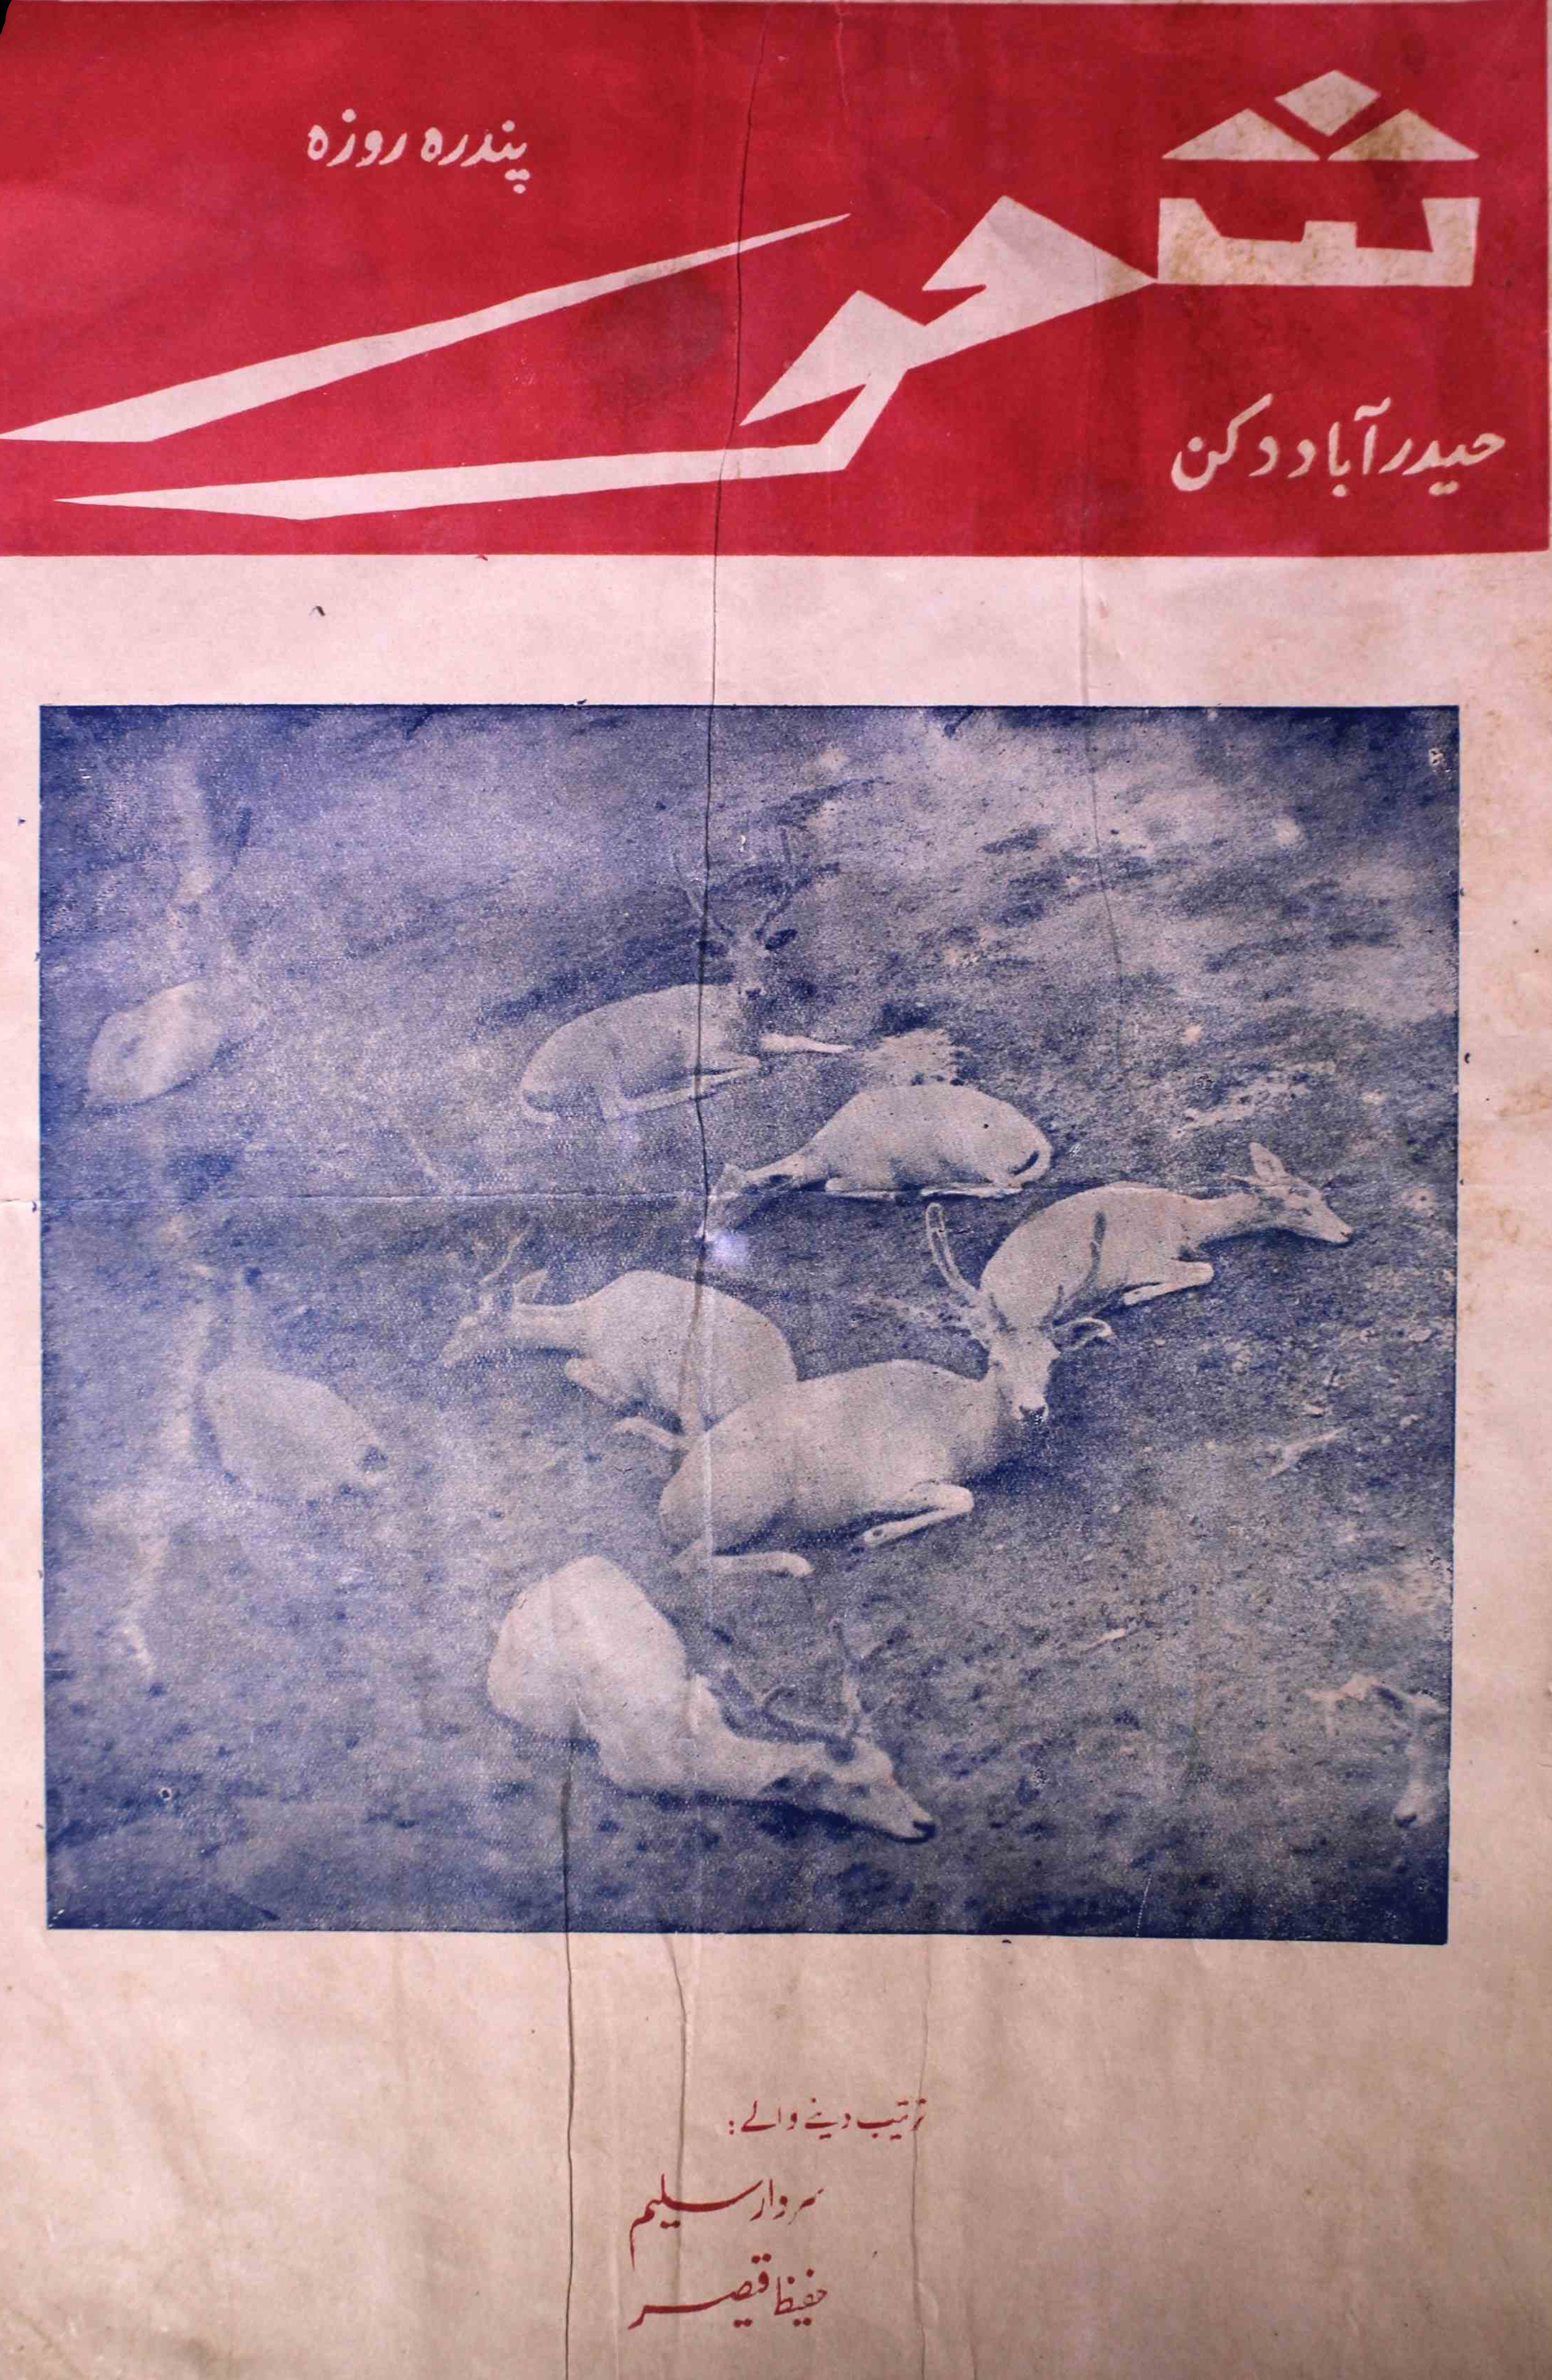 shuoor-shumaara-number-010-sardar-saleem-magazines